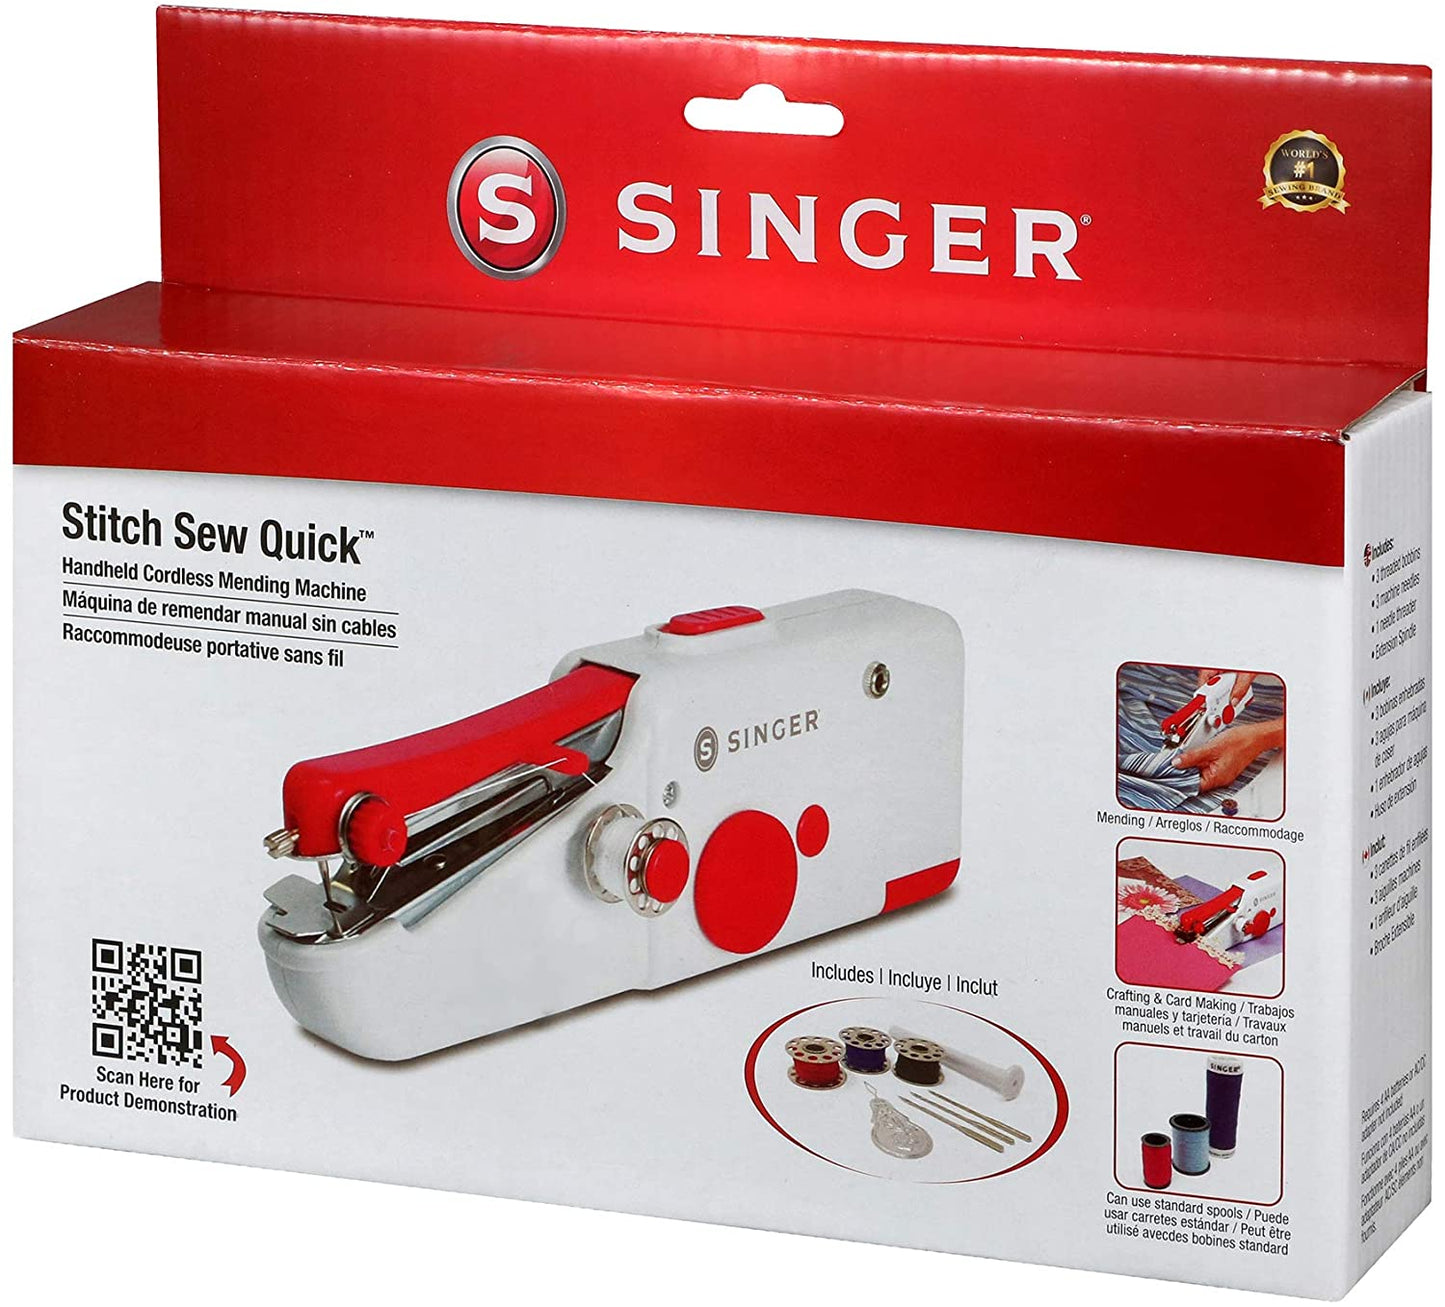 SINGER 01663 Stitch Sew Quick Portable Mending Machine